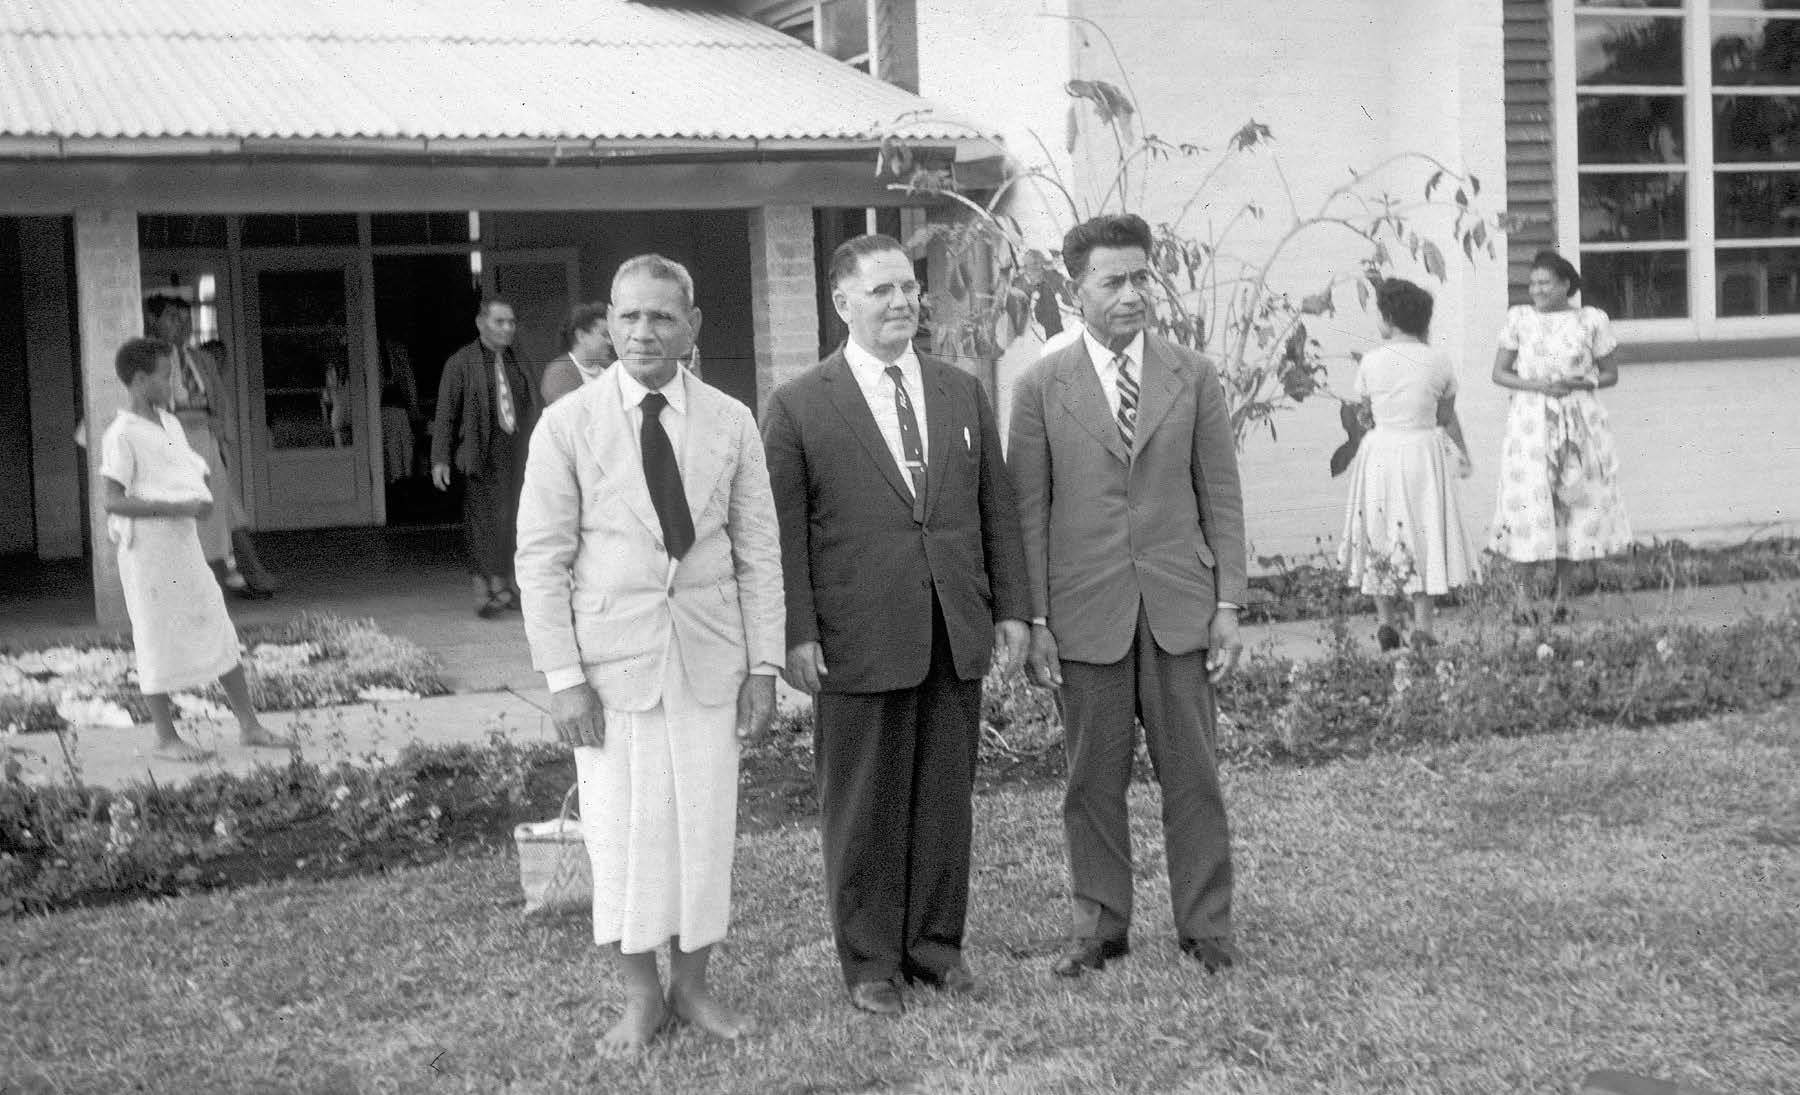 President Fred Stone with his counselors Siosifa Tu‘iketei Pule and Misitana Vea. Zola Jensen collection courtesy of Lorraine Morton Ashton.